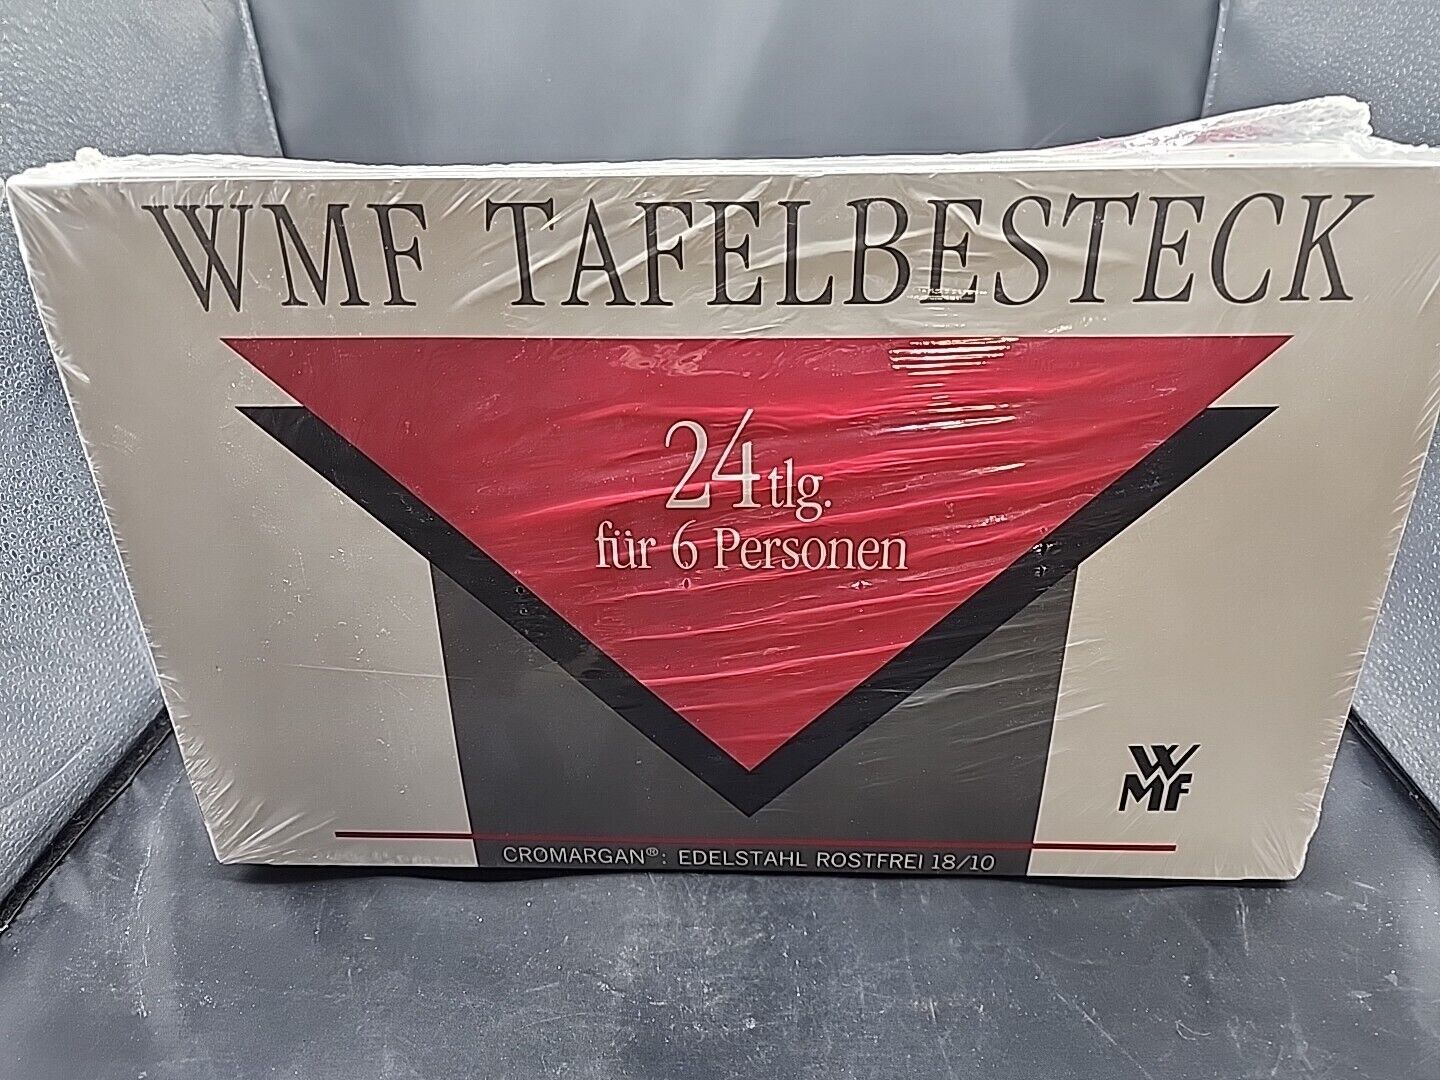 VINTAGE WMF TAFELBESTECK CROMARGAN EDELSTAHL ROSTFREI 18/10 BRAND Sealed Box.